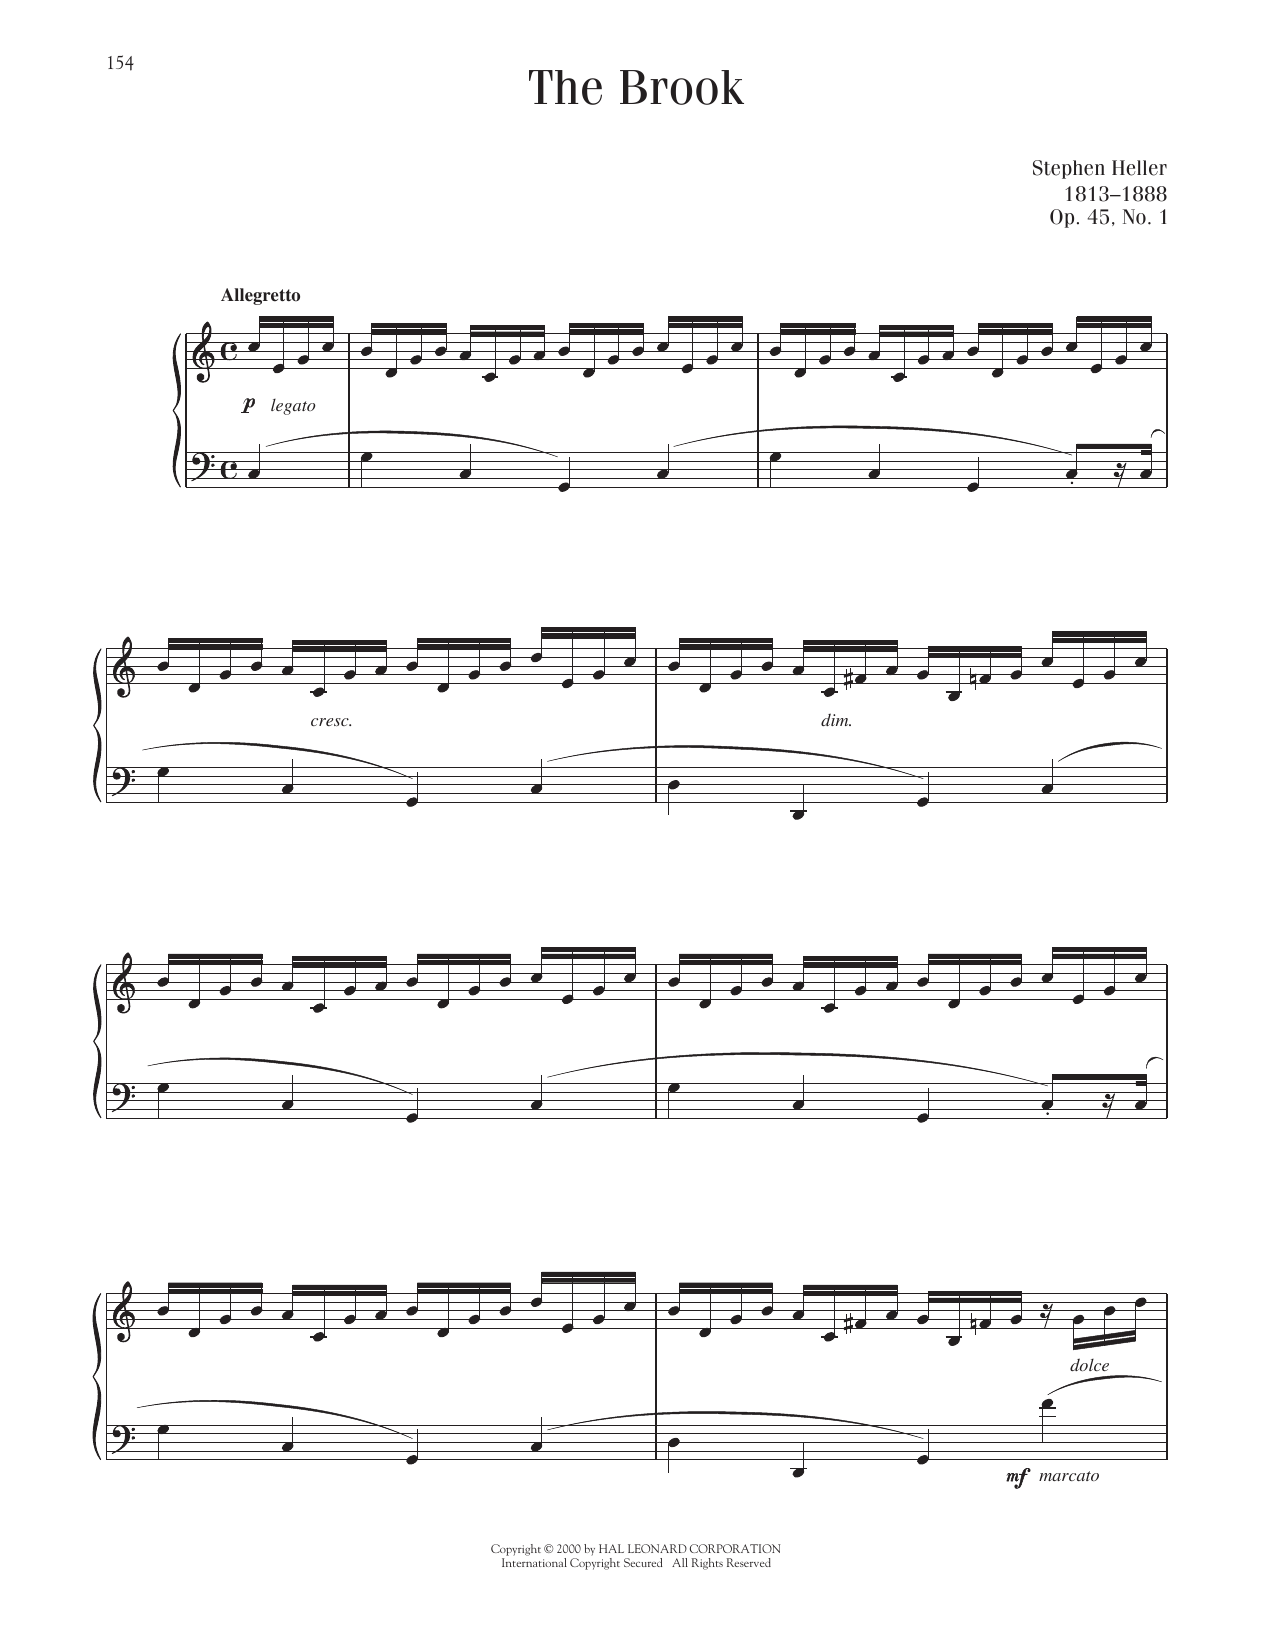 Stephen Heller The Brook, Op. 45, No. 1 sheet music notes printable PDF score